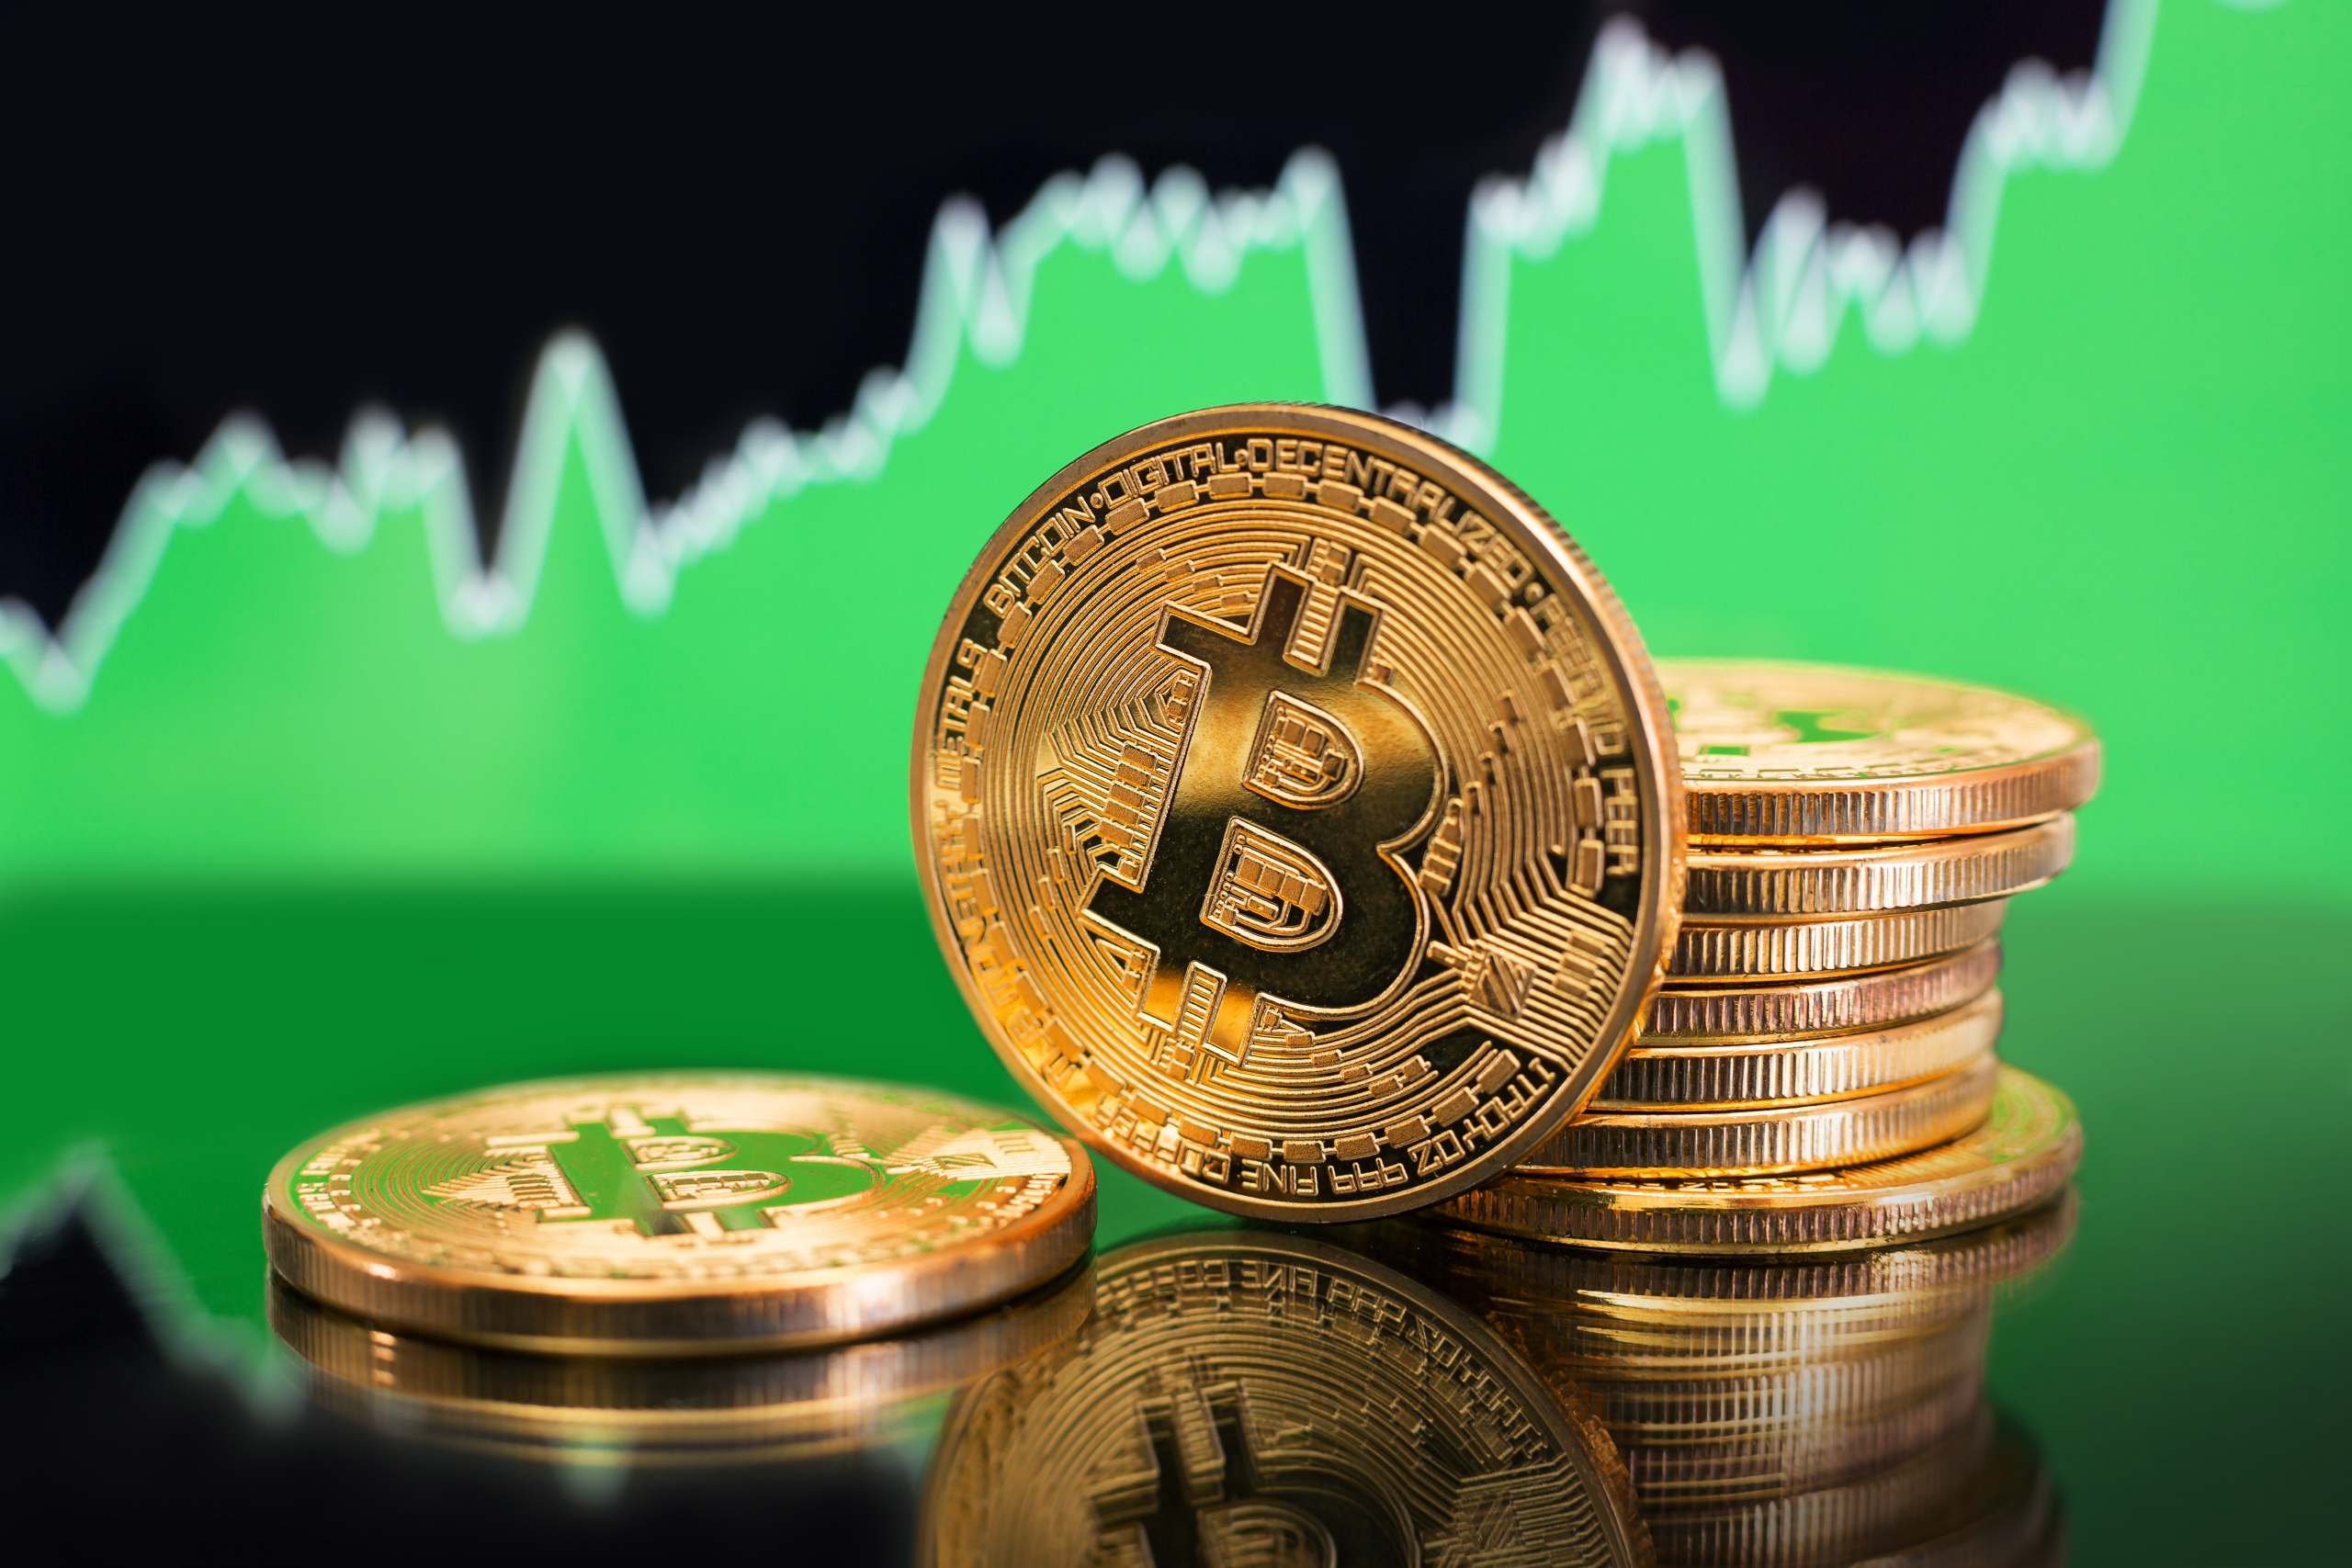 Bitcoin Rises While Stocks Drop, Nasdaq Correlation Weakens
